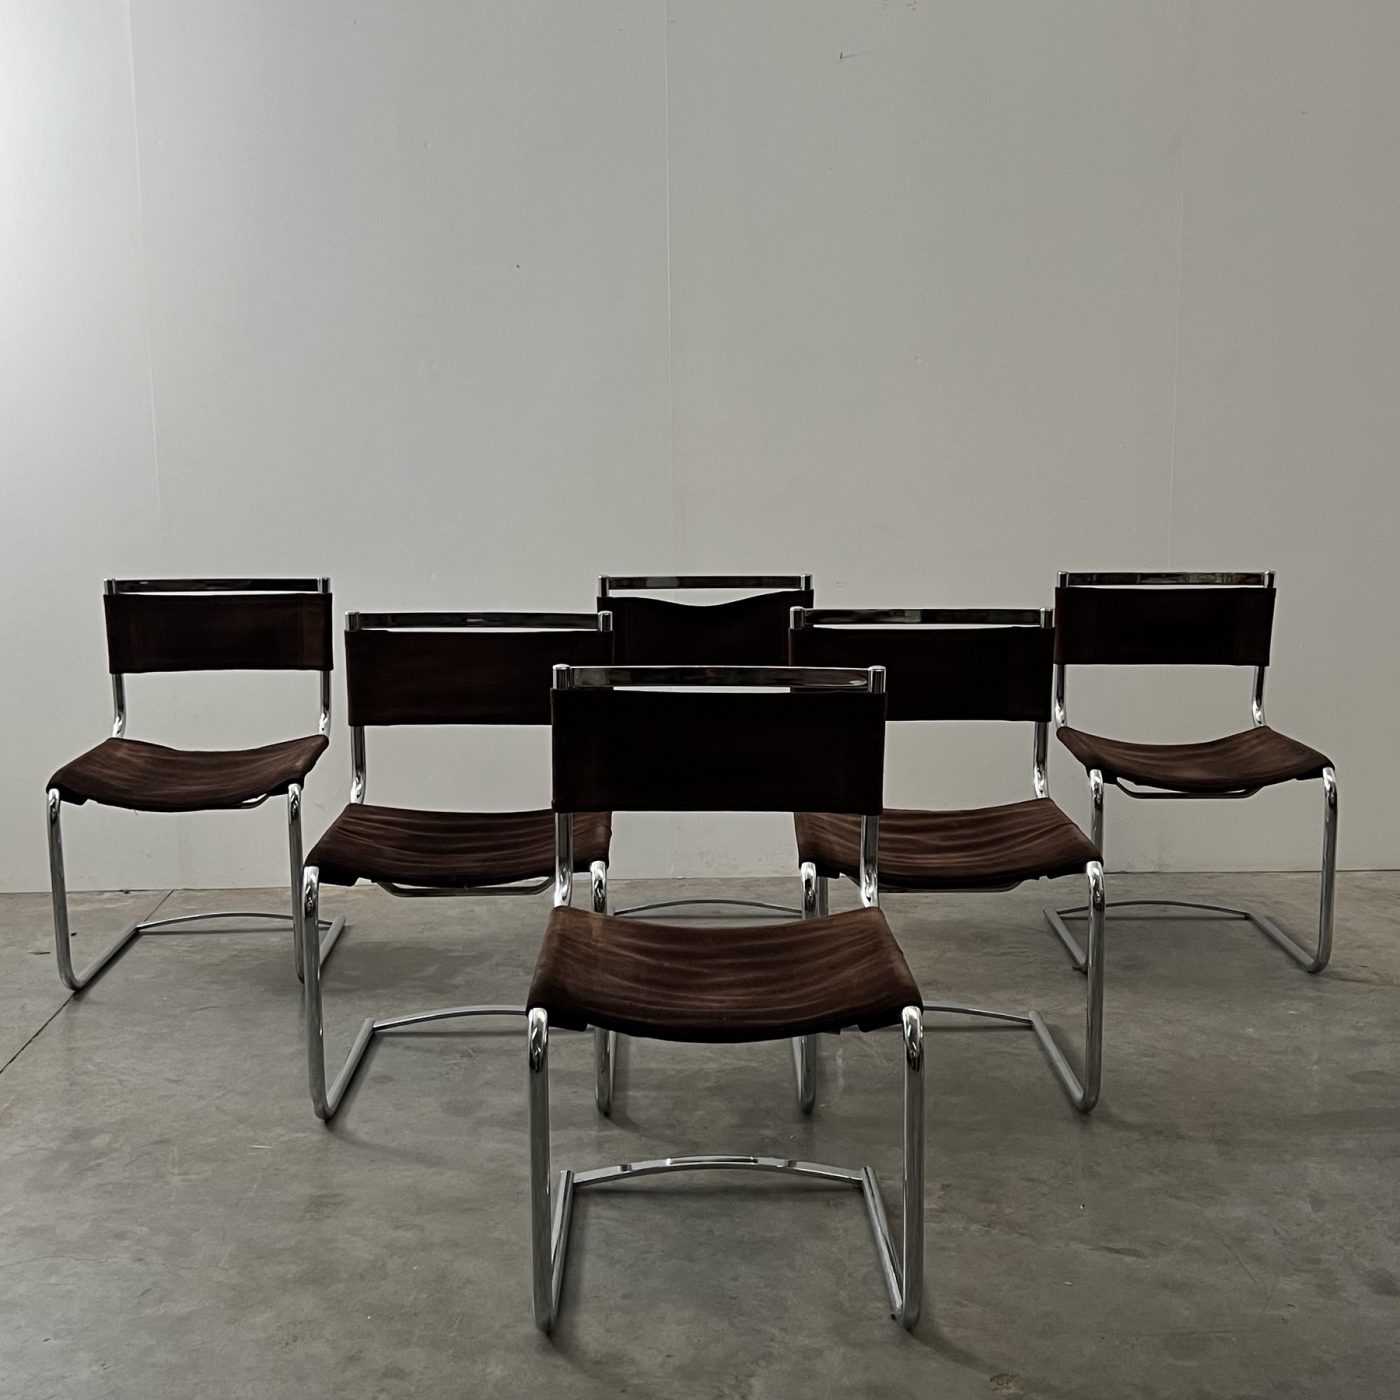 objet-vagabond-vintage-chairs0003